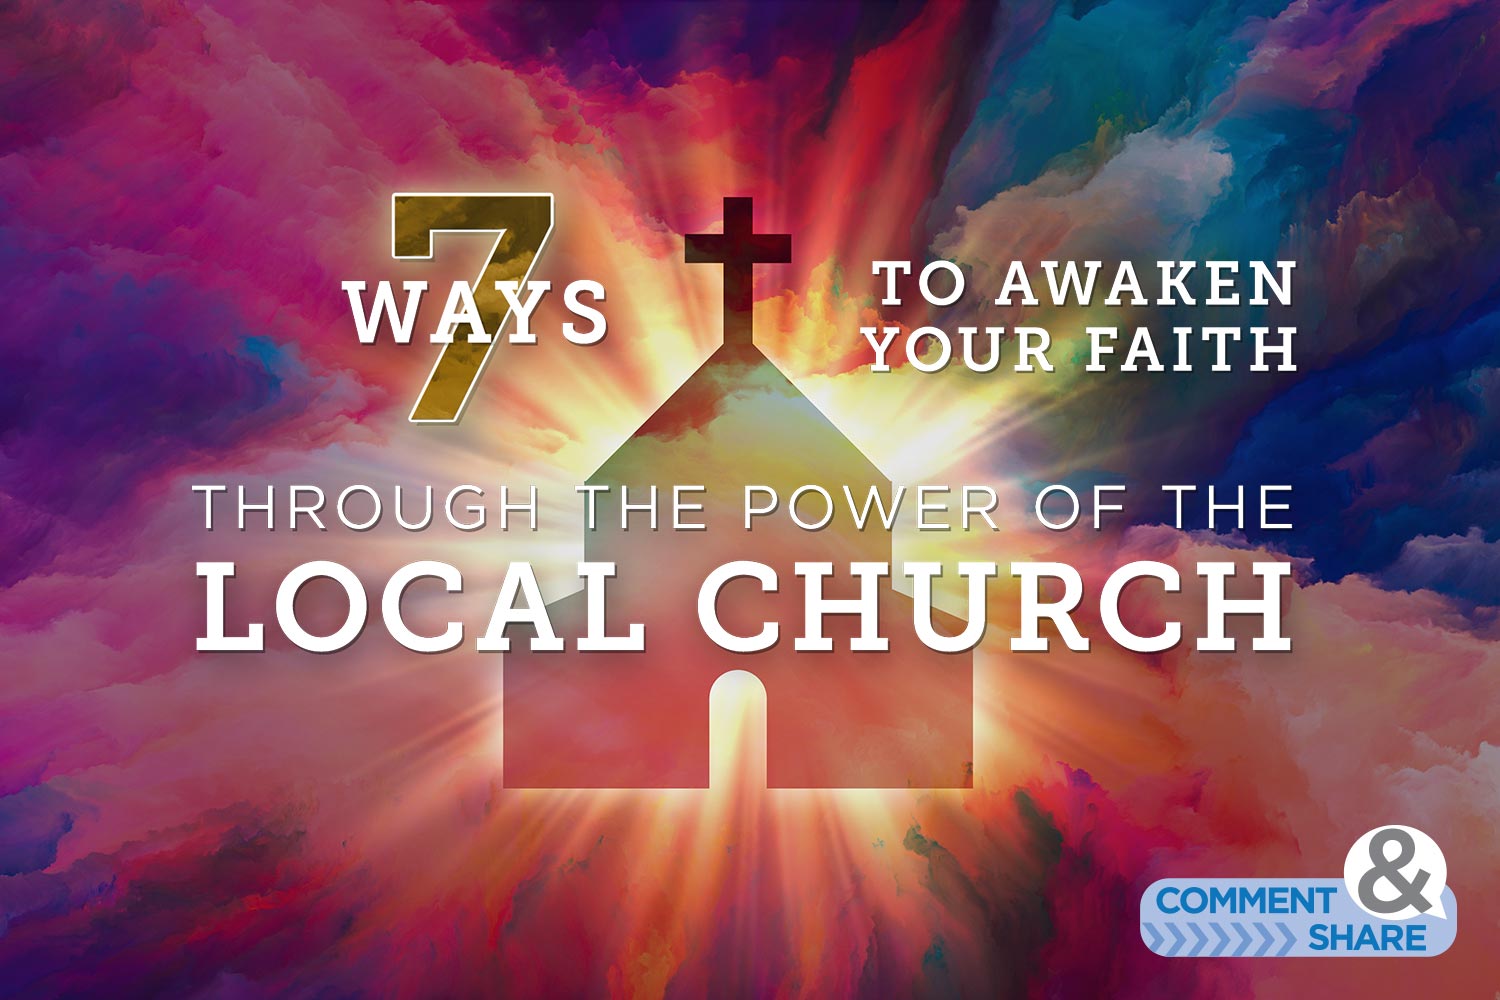 7 Ways to Awaken Your Faith through the Power of the Local Church